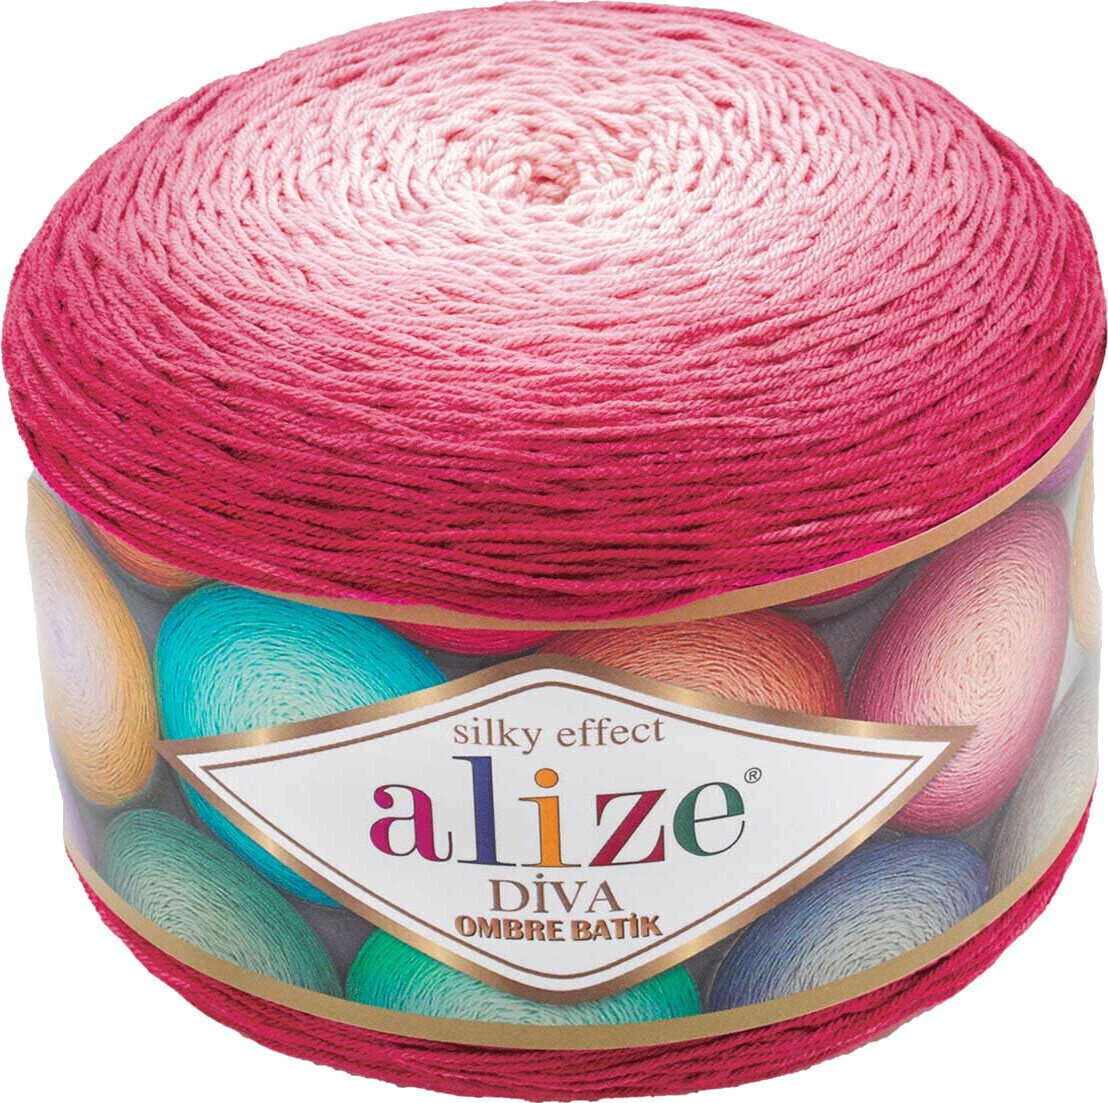 Knitting Yarn Alize Diva Ombre Batik 7367